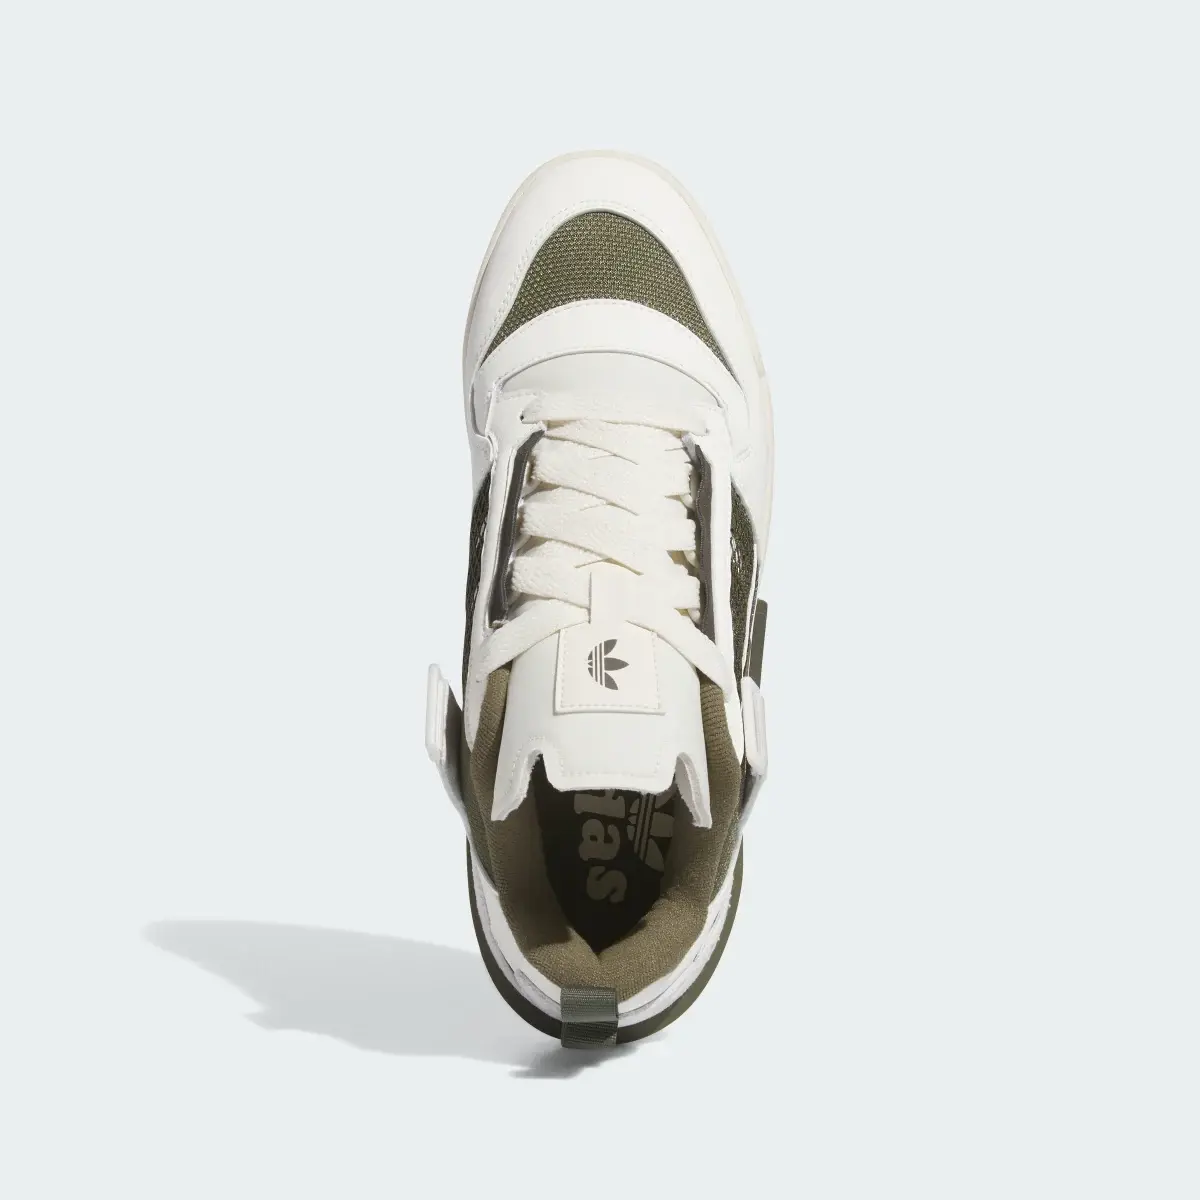 Adidas Forum Mod Low Shoes. 3